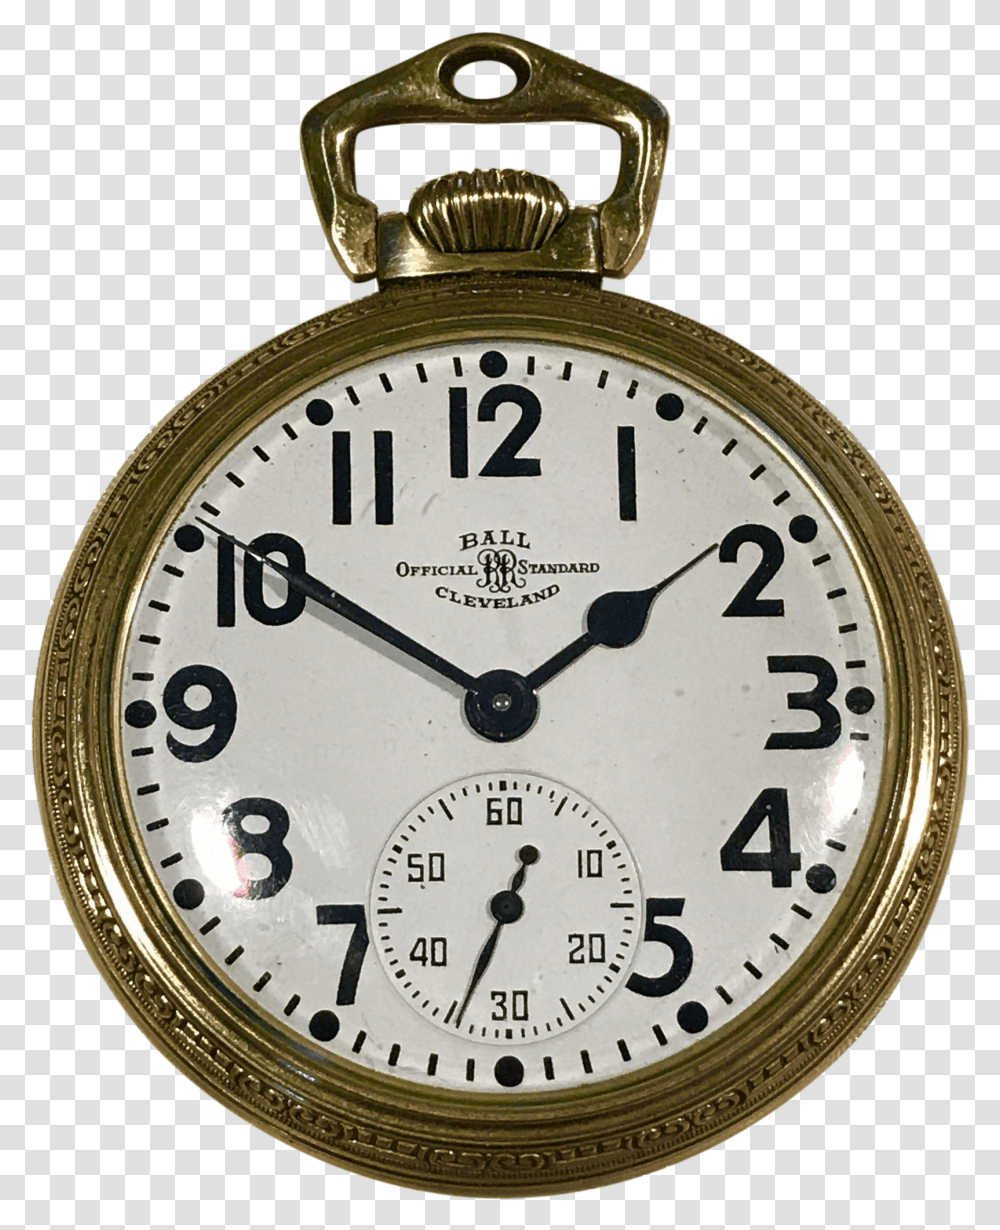 Clip Art Alarm Pocket Watch Railroad Wrist Watch, Clock Tower, Architecture, Building, Alarm Clock Transparent Png